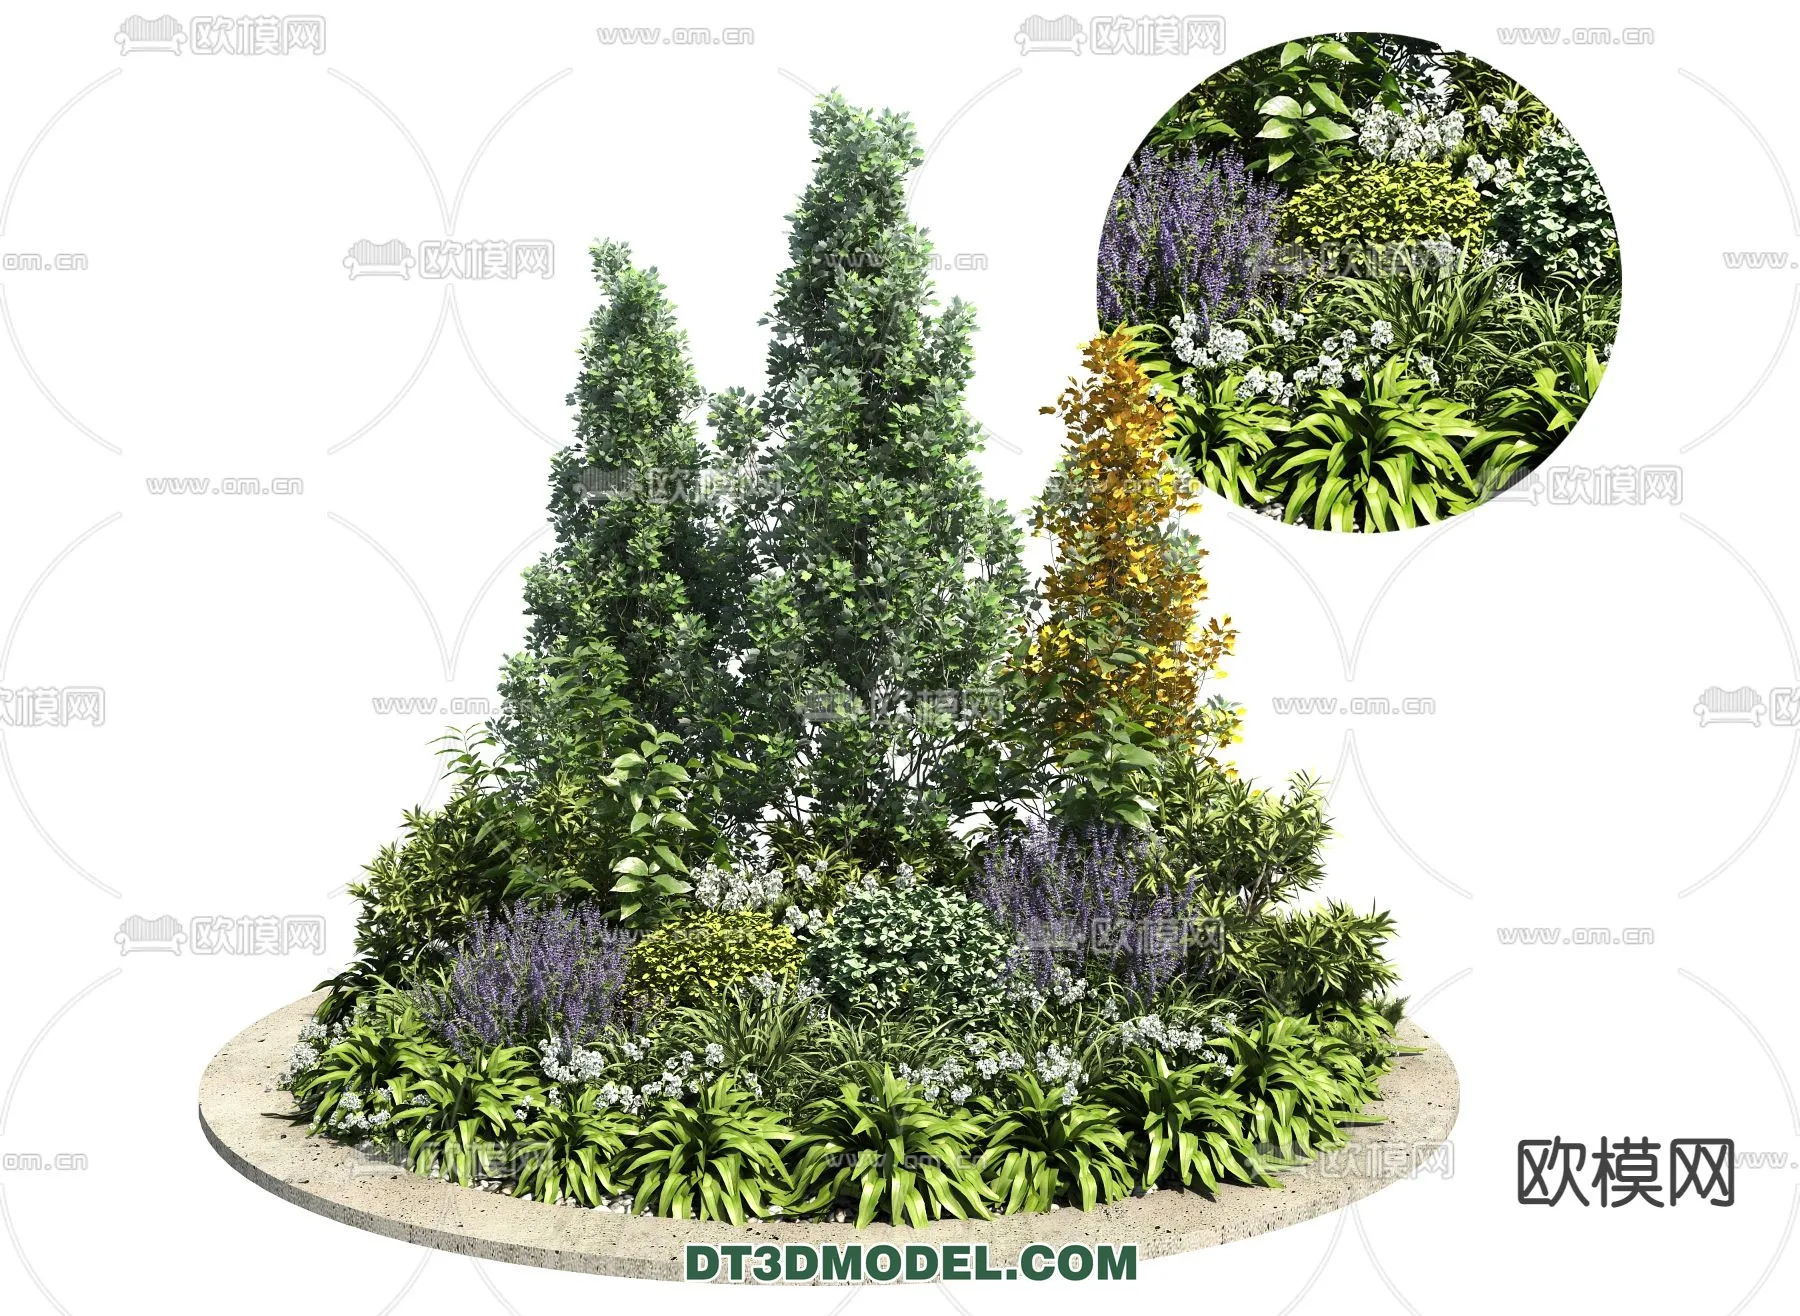 PLANTS – BUSH – VRAY / CORONA – 3D MODEL – 292